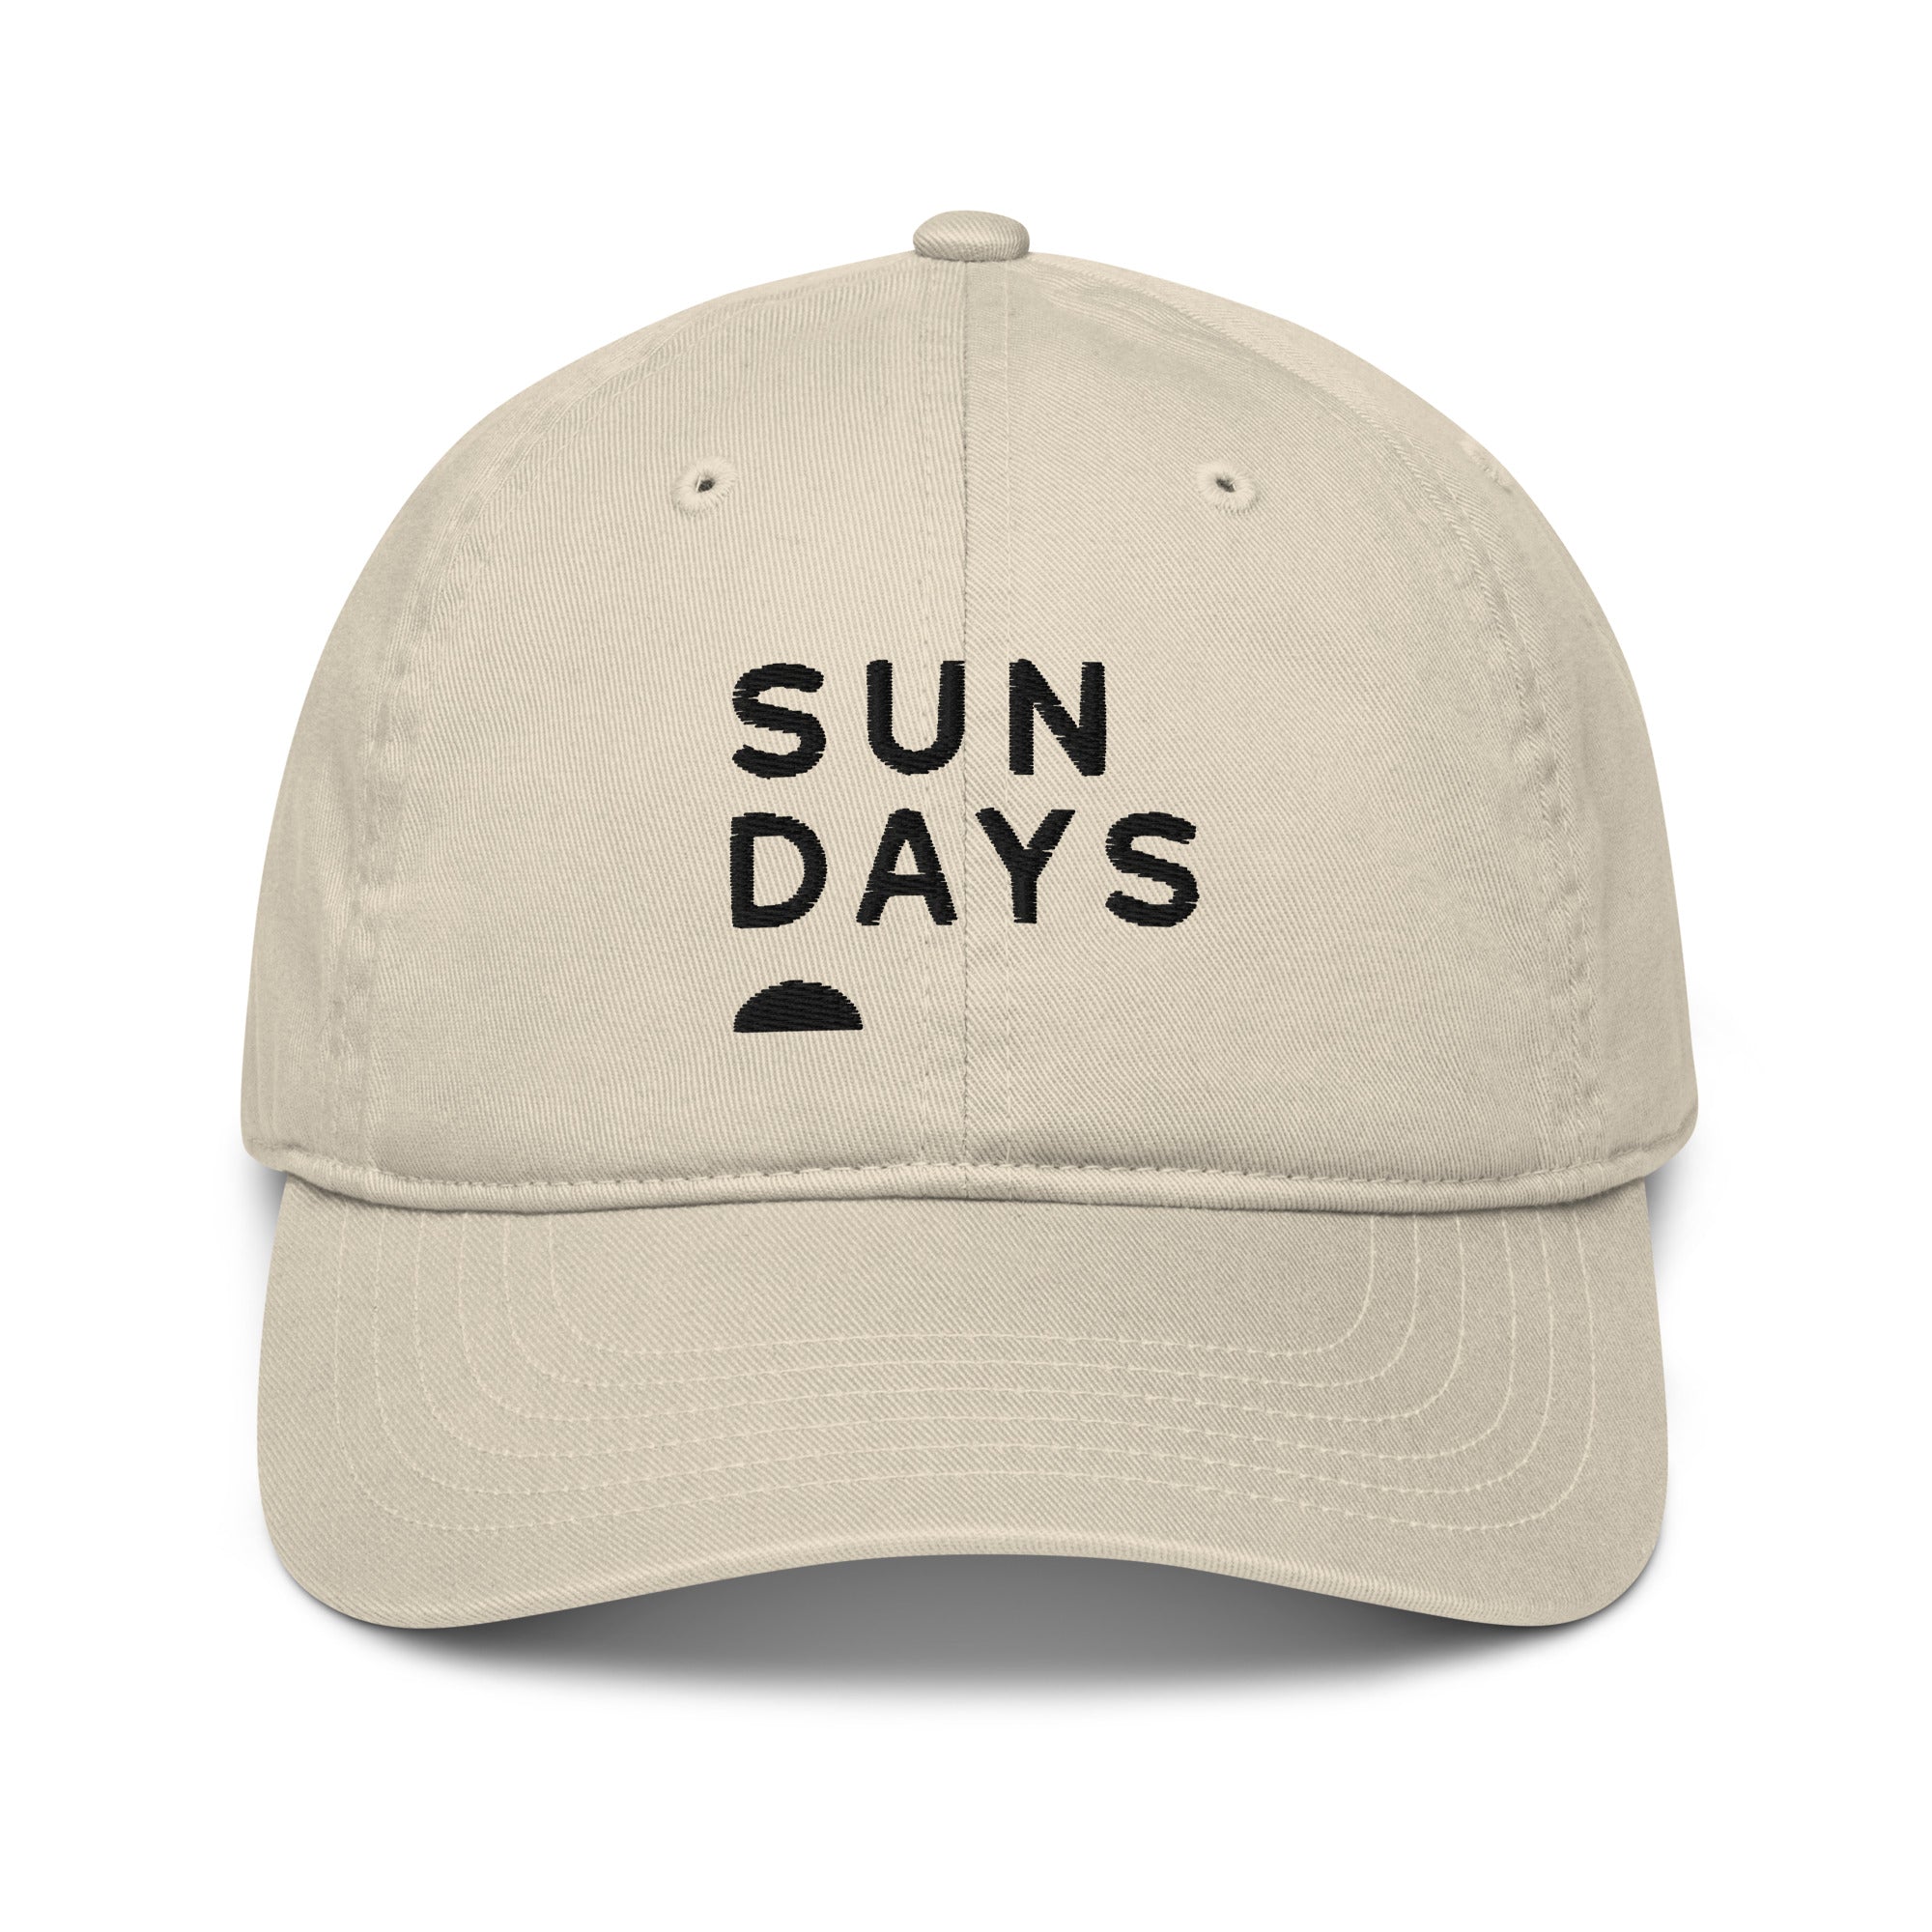 SUN DAYS Organic Dad Hat